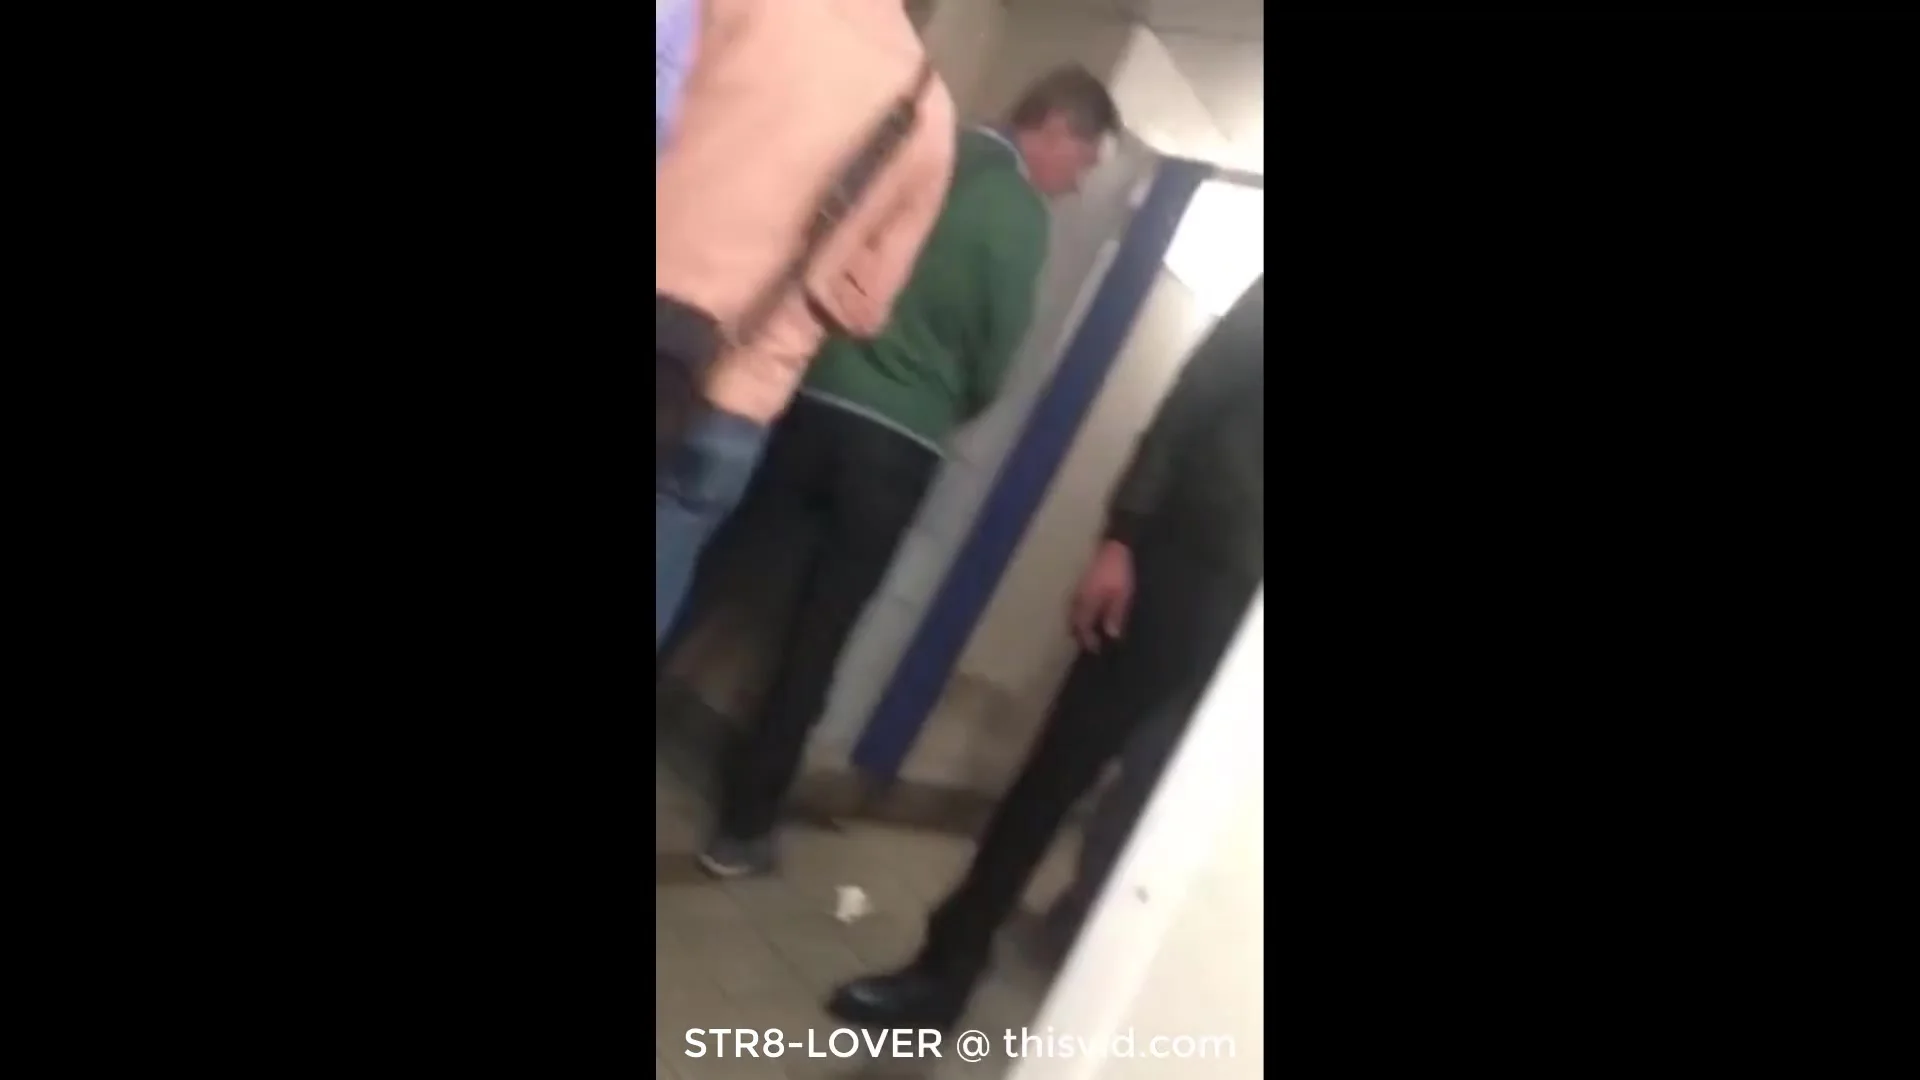 Spy cam cruises a bathroom full of gay guys pic